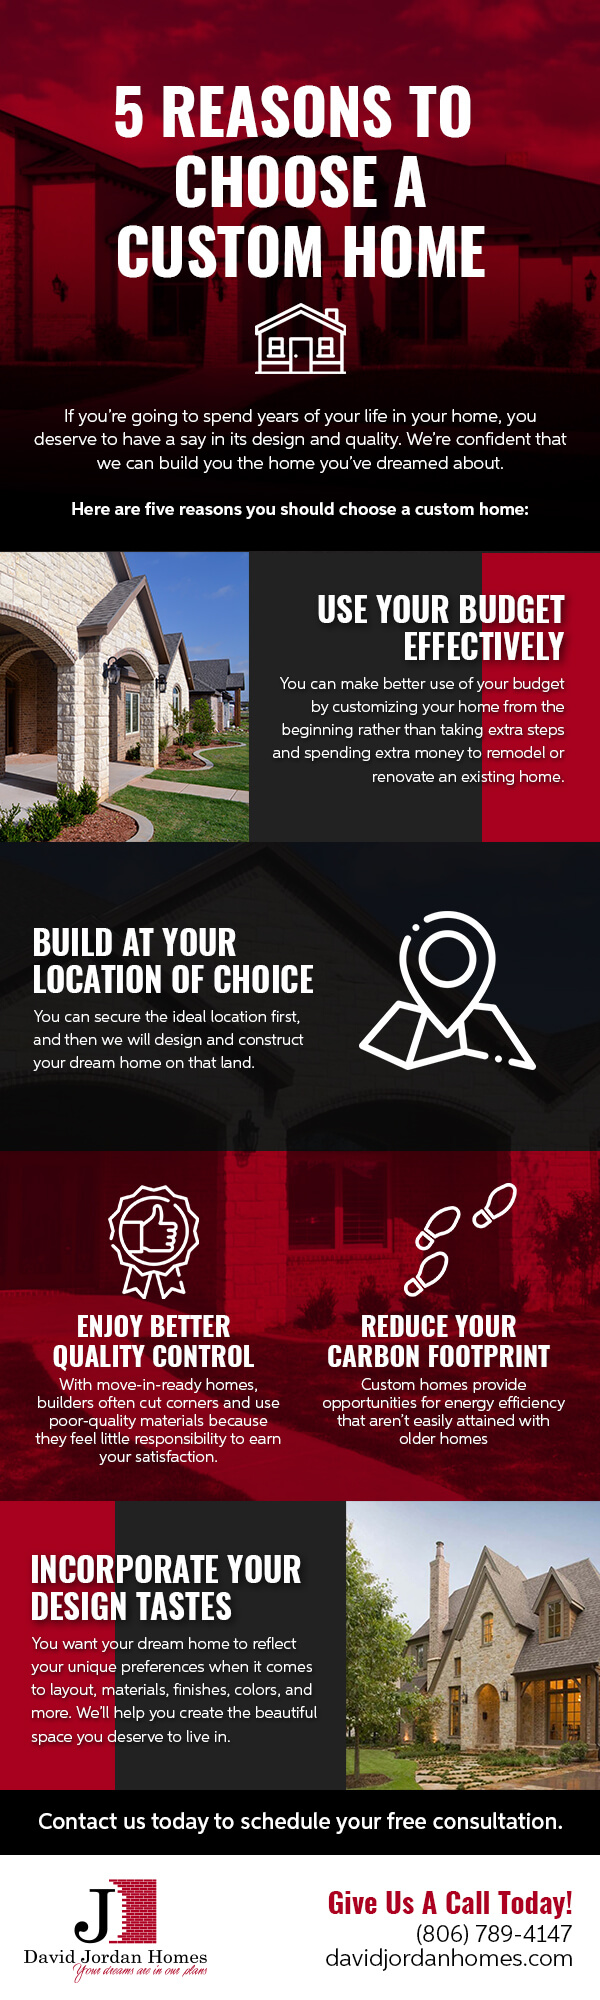 5 Reasons to Choose a Custom Home